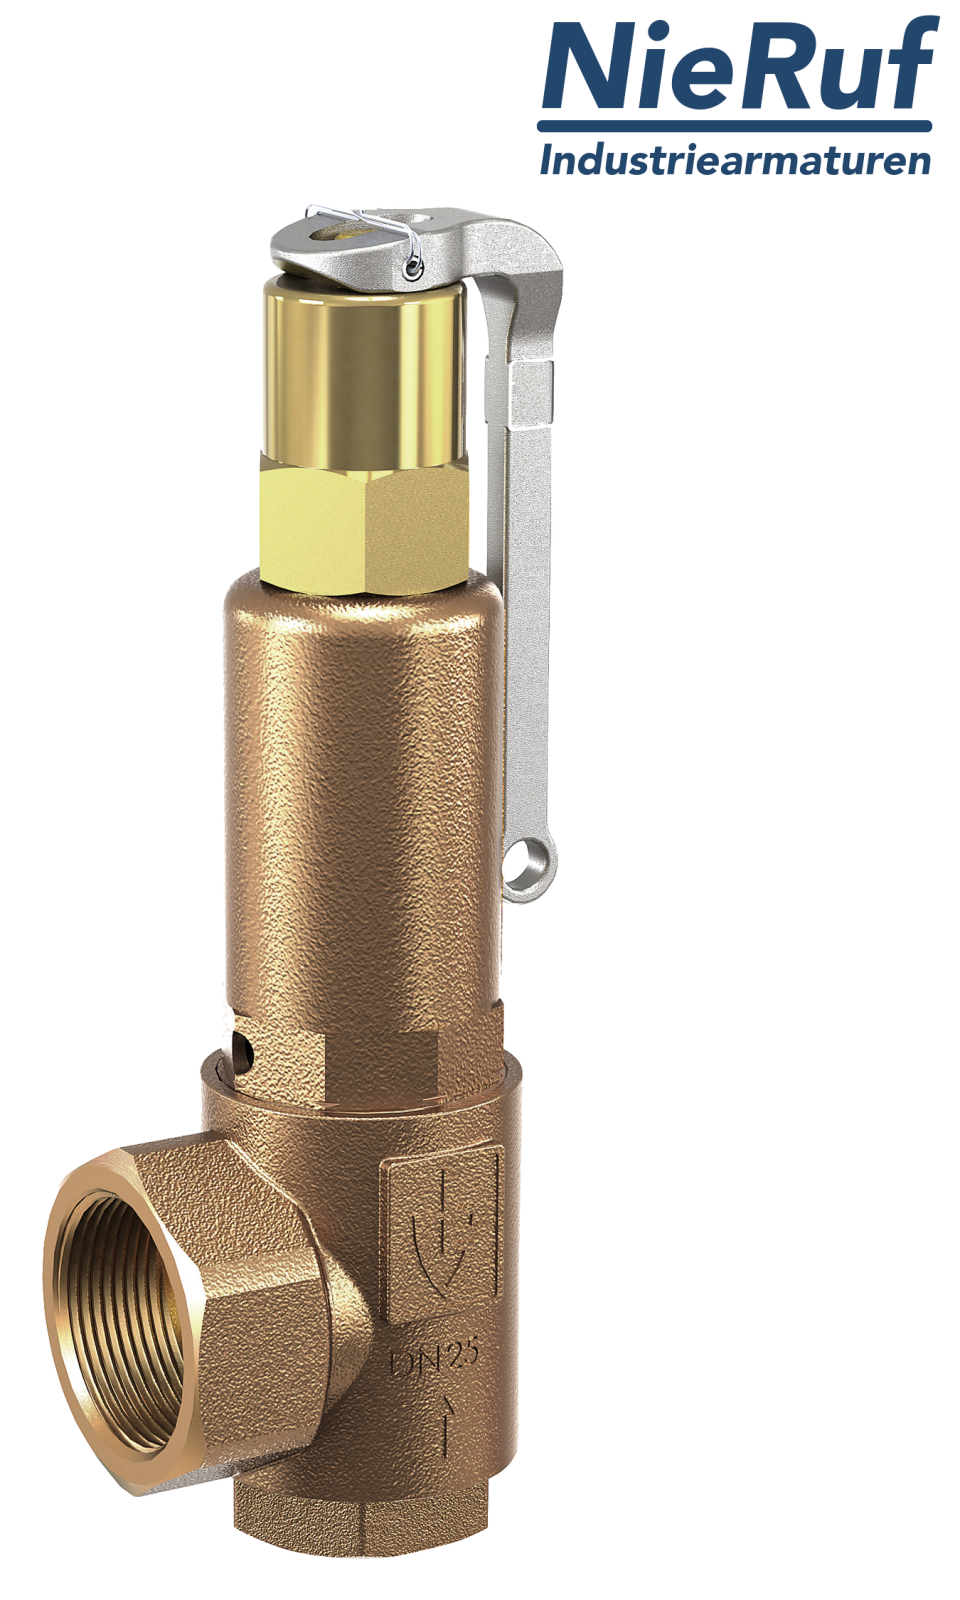 safety valve 1" x 1 1/2" fm SV07 neutral gaseous media, gunmetal EPDM, with lever